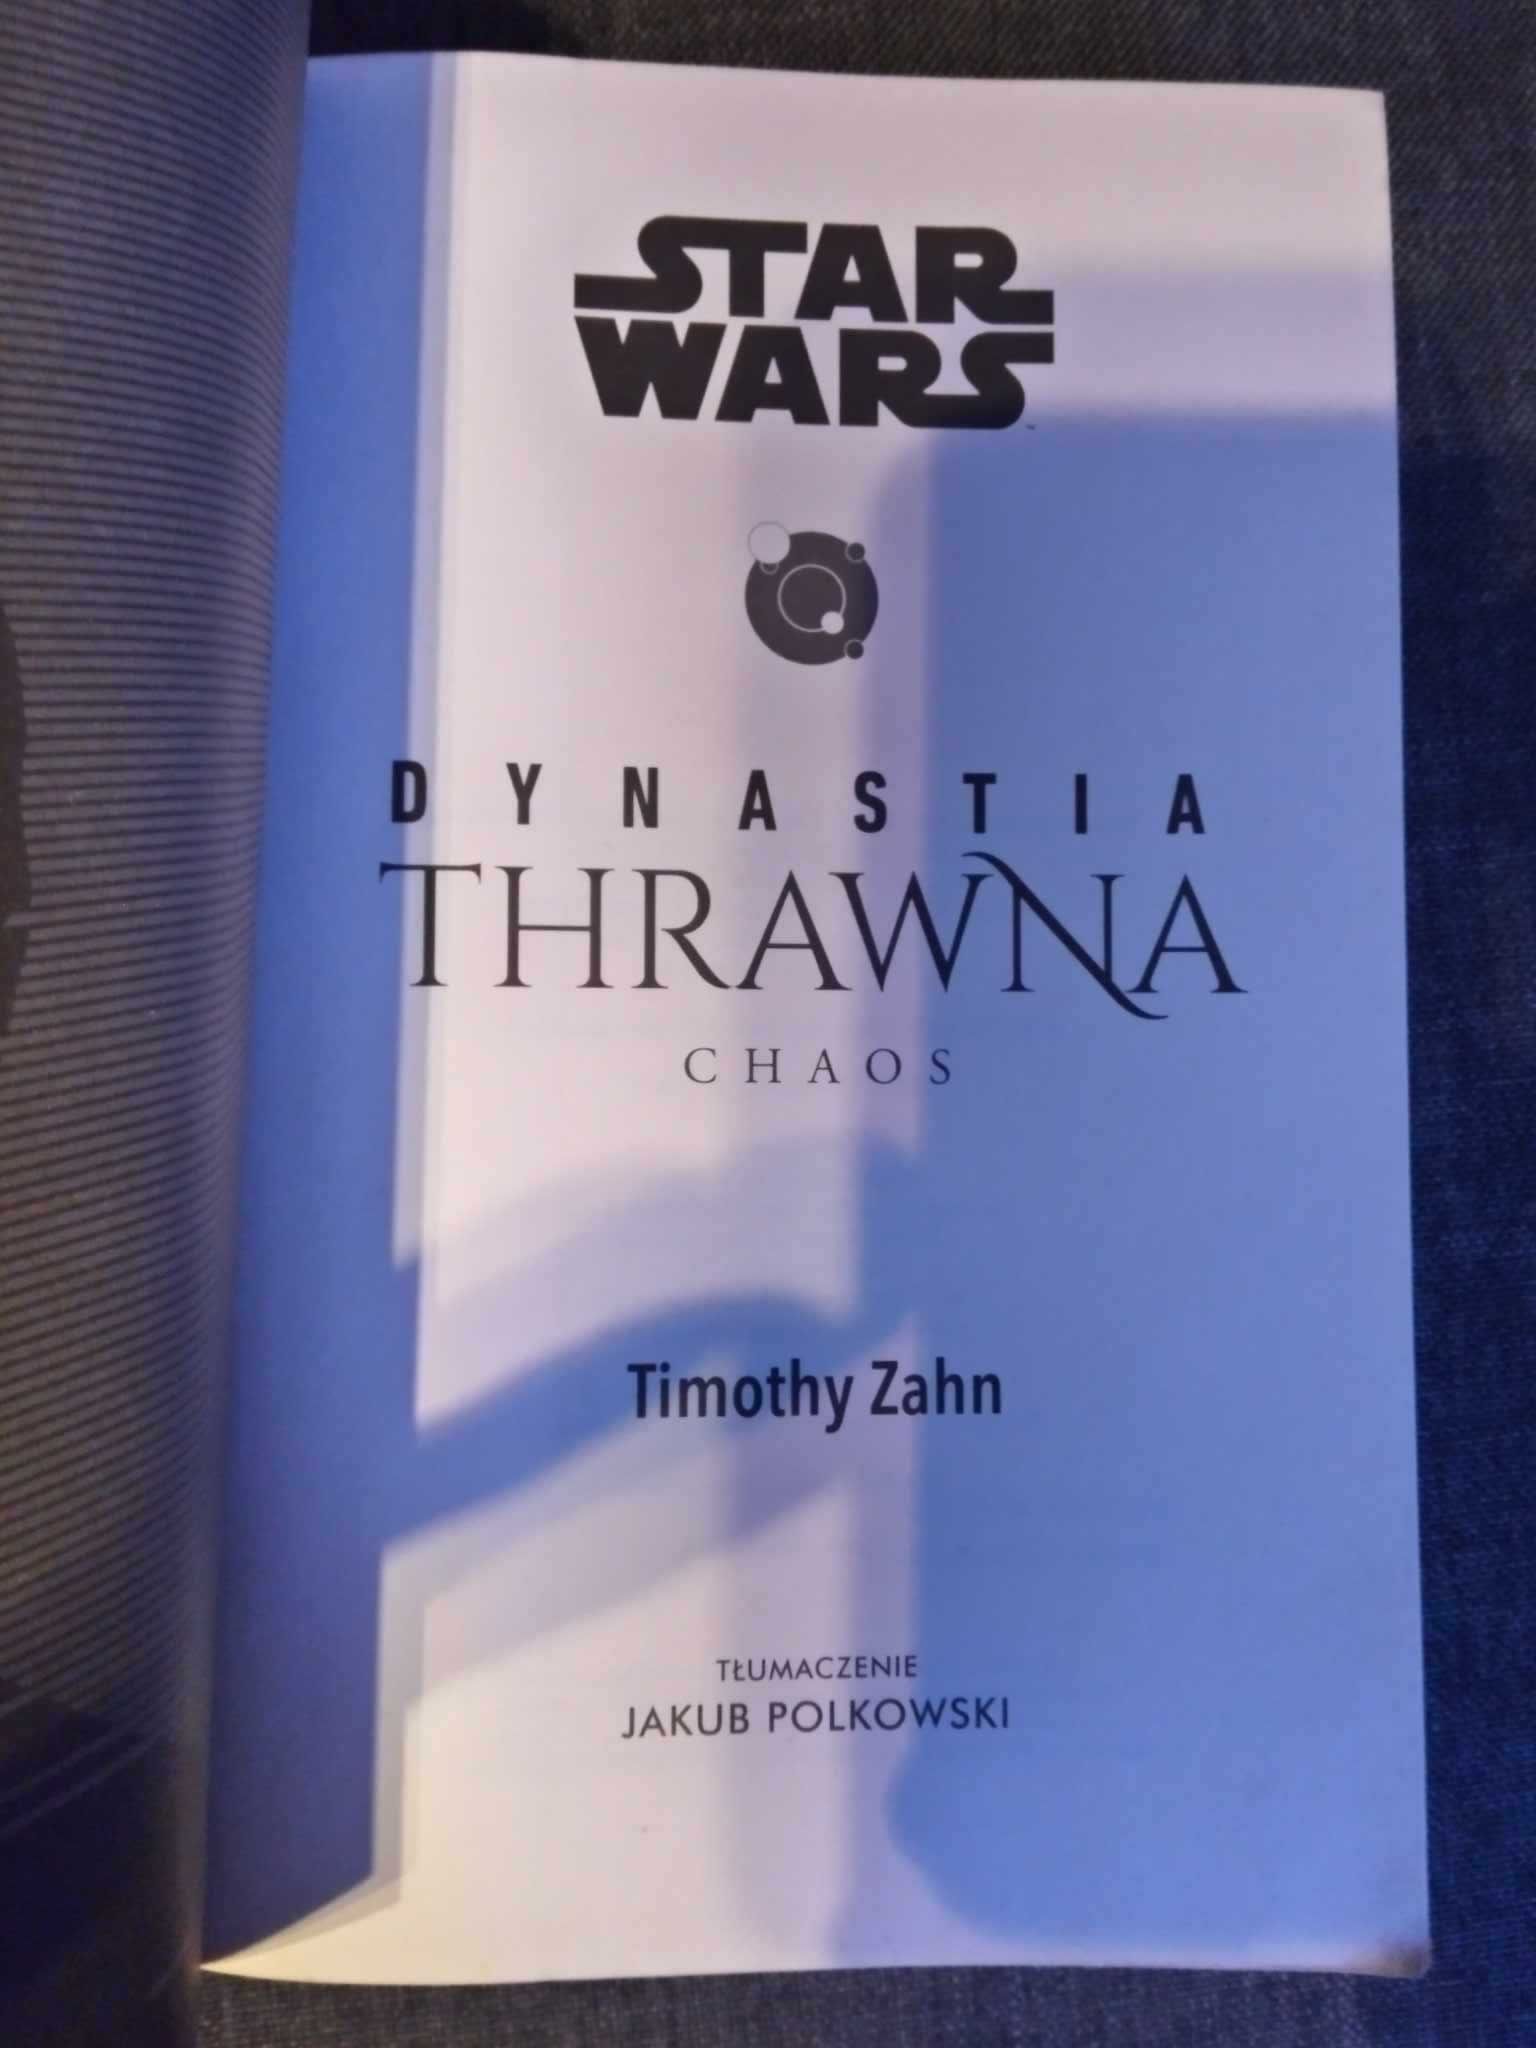 STAR WARS Dynastia Thrawna Chaos Timothy Zahn